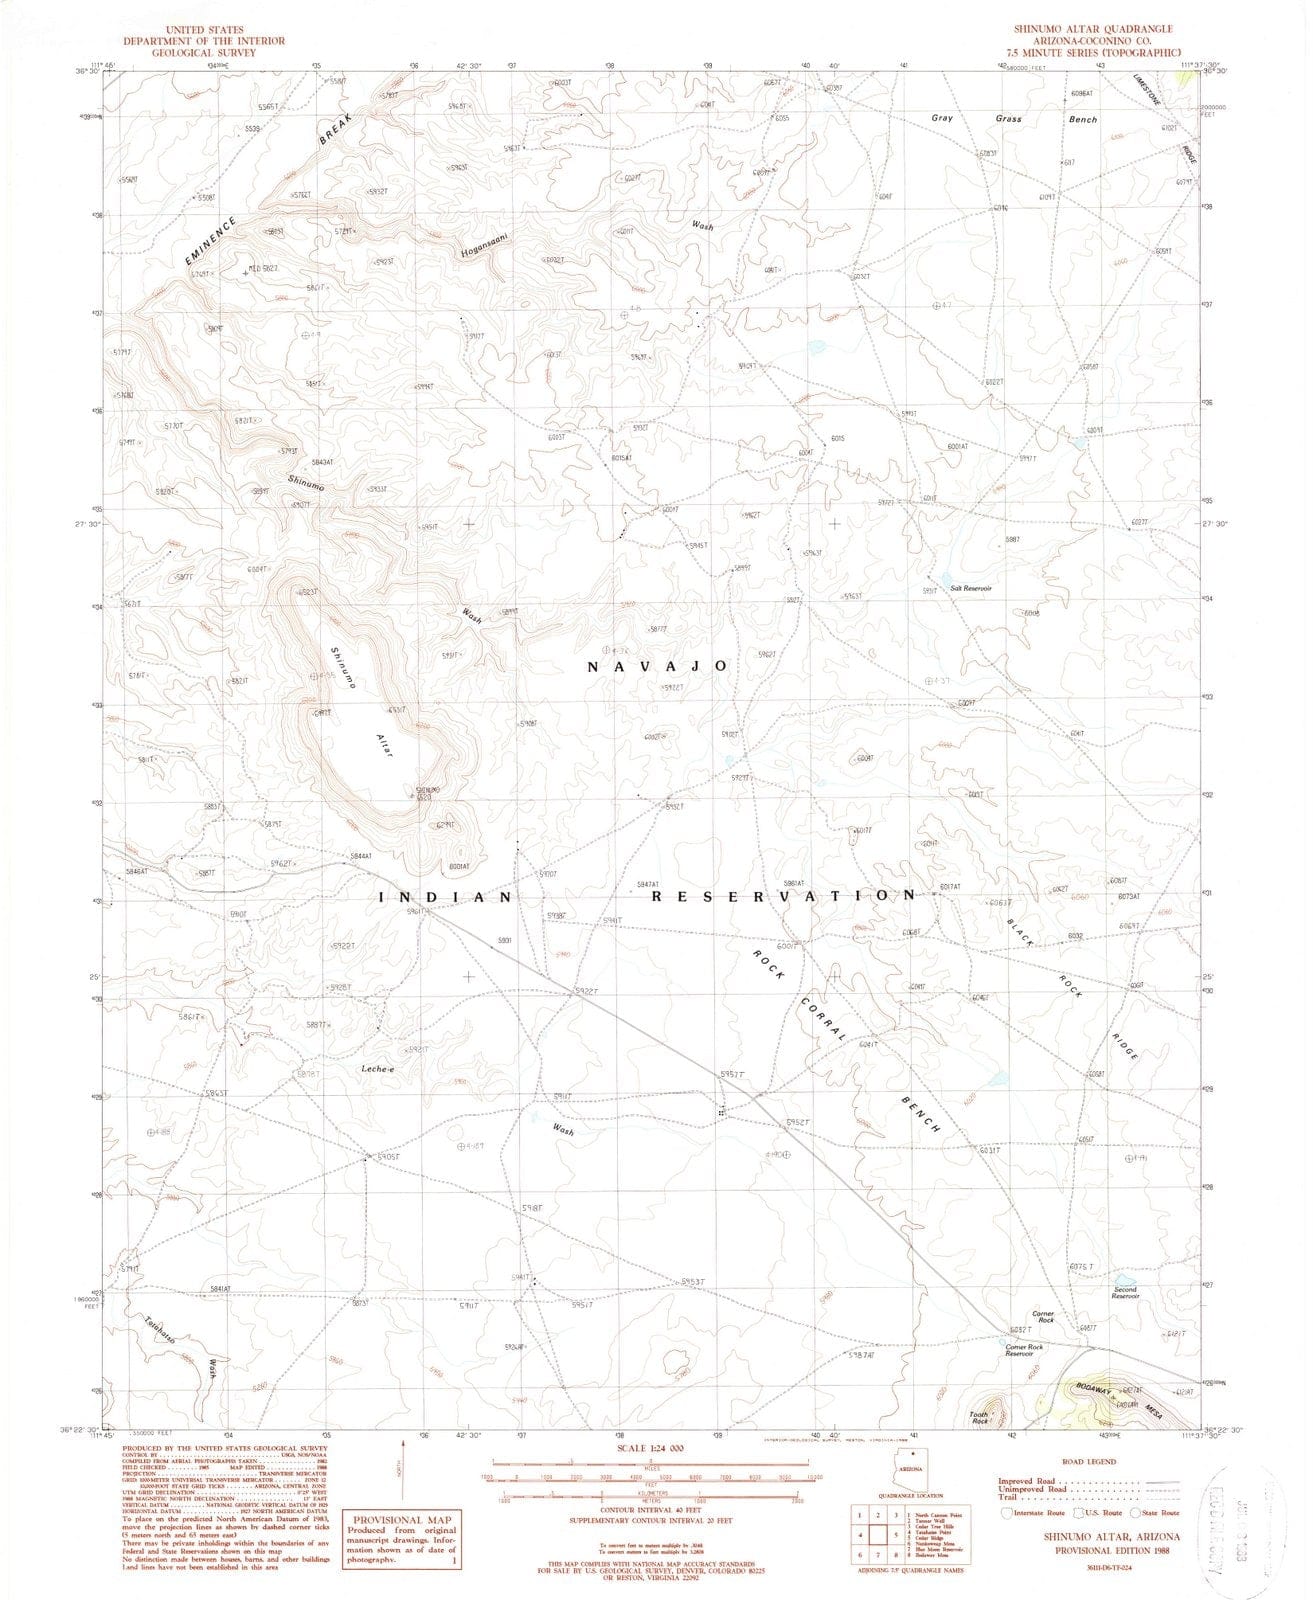 1988 Shinumo Altar, AZ - Arizona - USGS Topographic Map